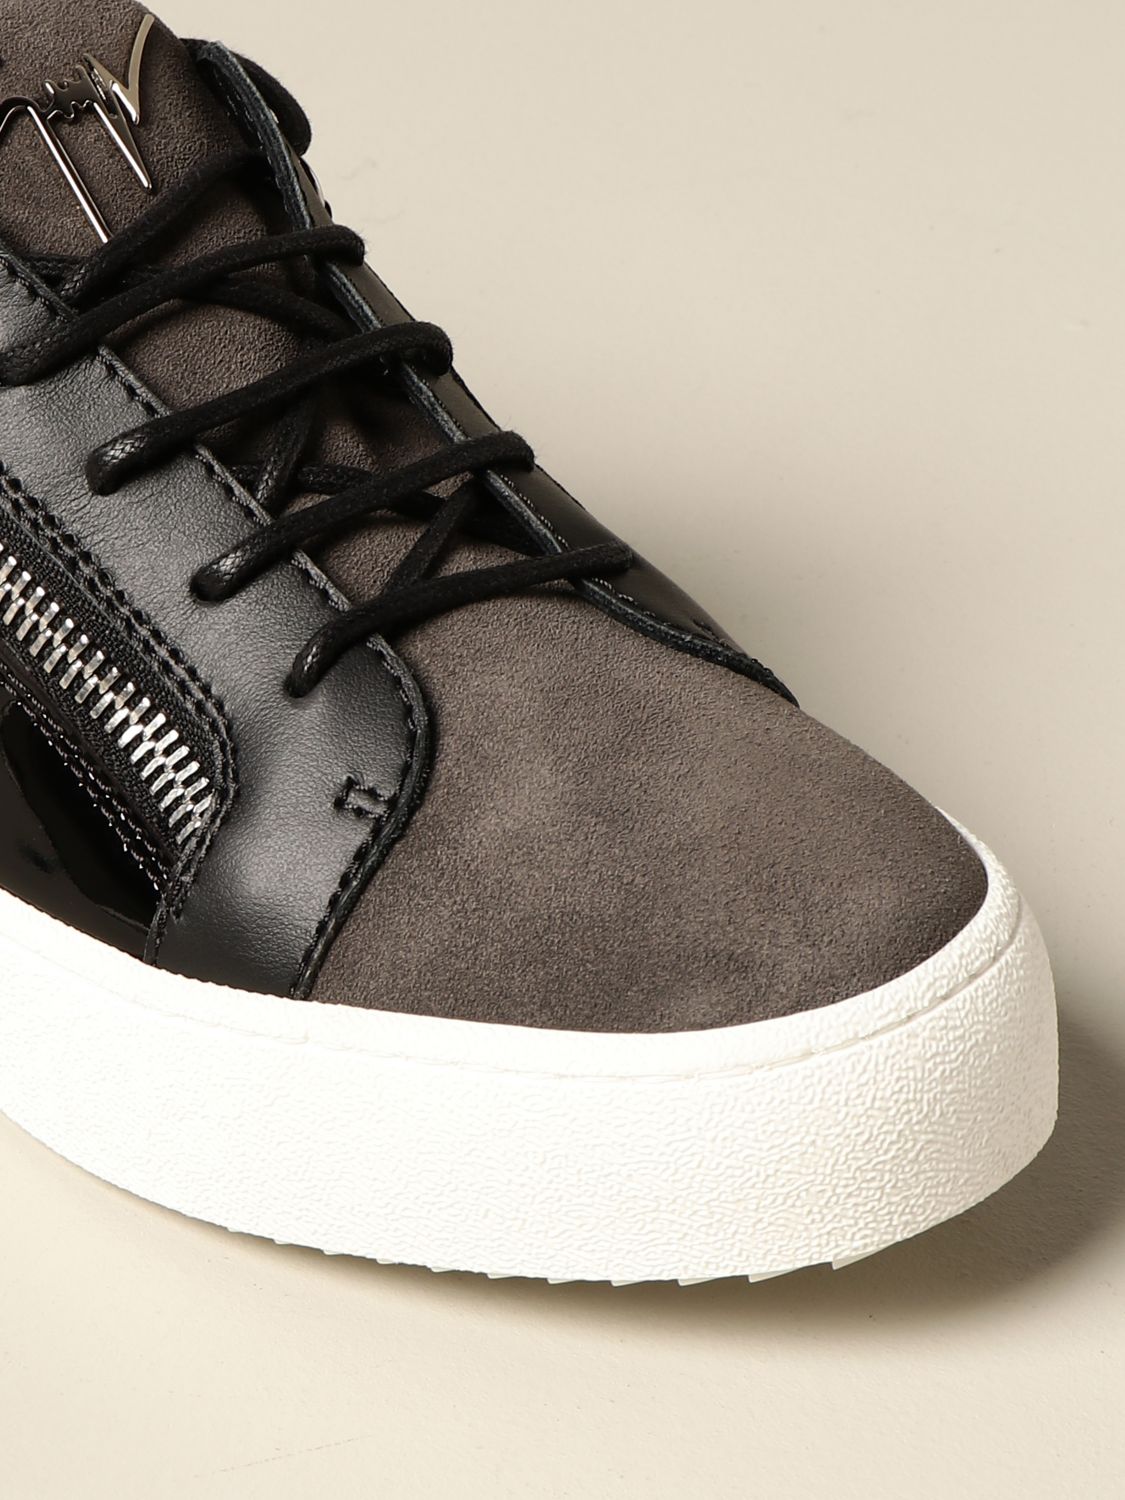 GIUSEPPE ZANOTTI DESIGN: sneakers in patent leather | Sneakers Giuseppe Design Men Grey | Sneakers Zanotti RU00010 GIGLIO.COM